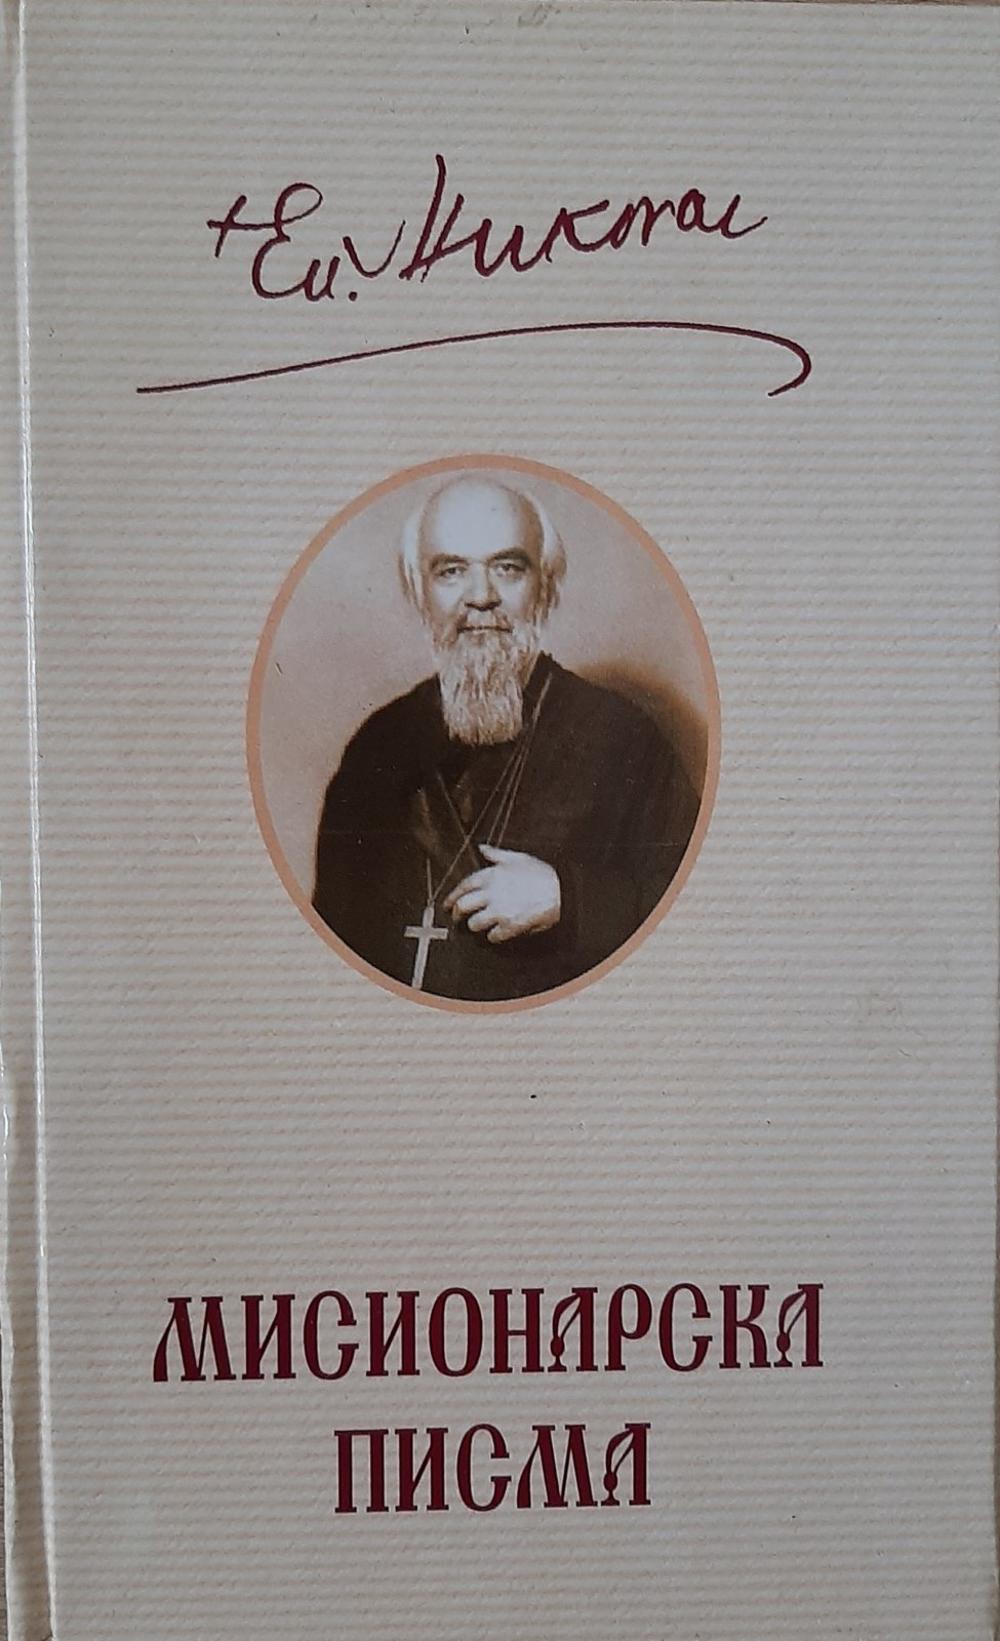 Misionarska pisma svetog vladike Nikolaja Velimirovića